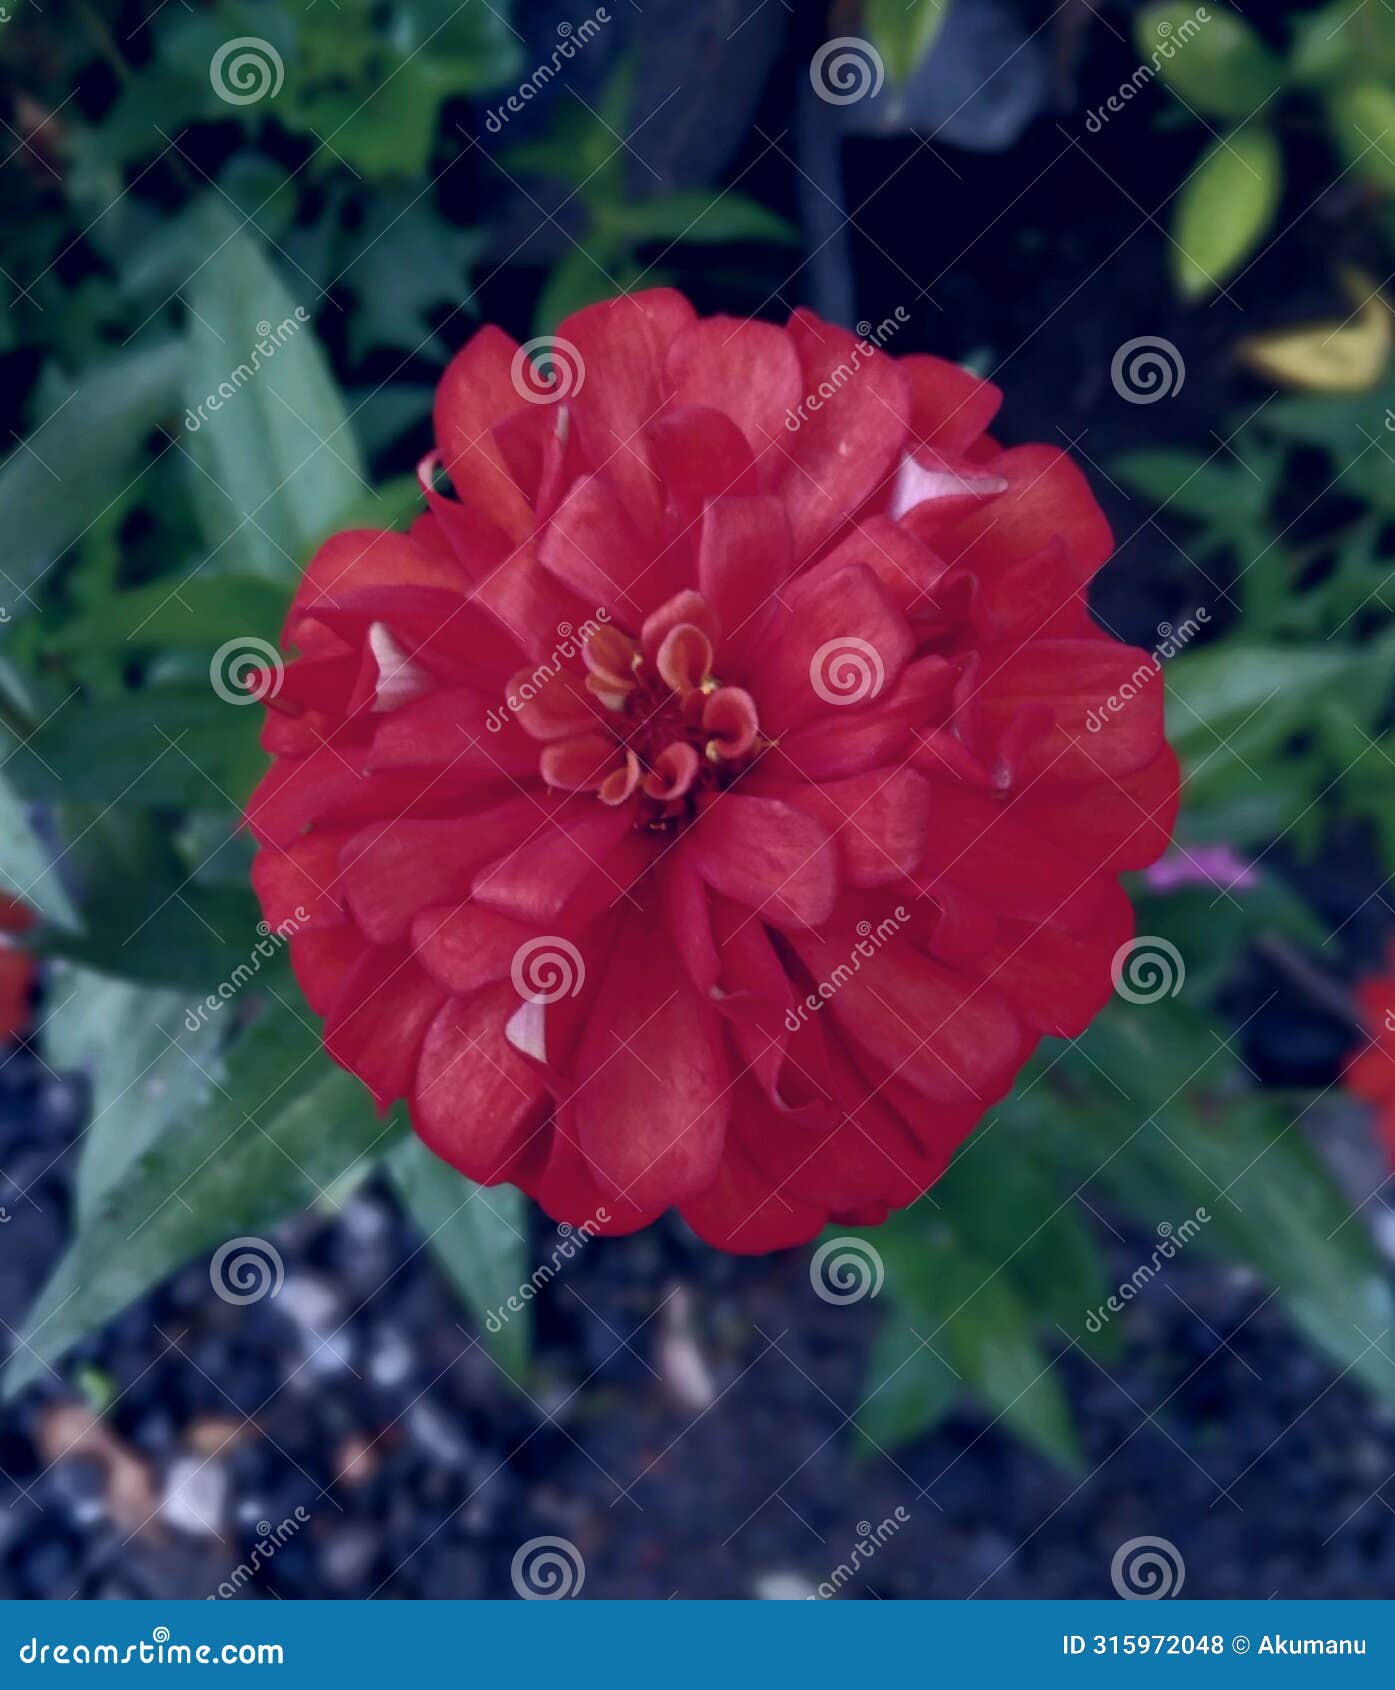 a beutiful red zenia flower in garden